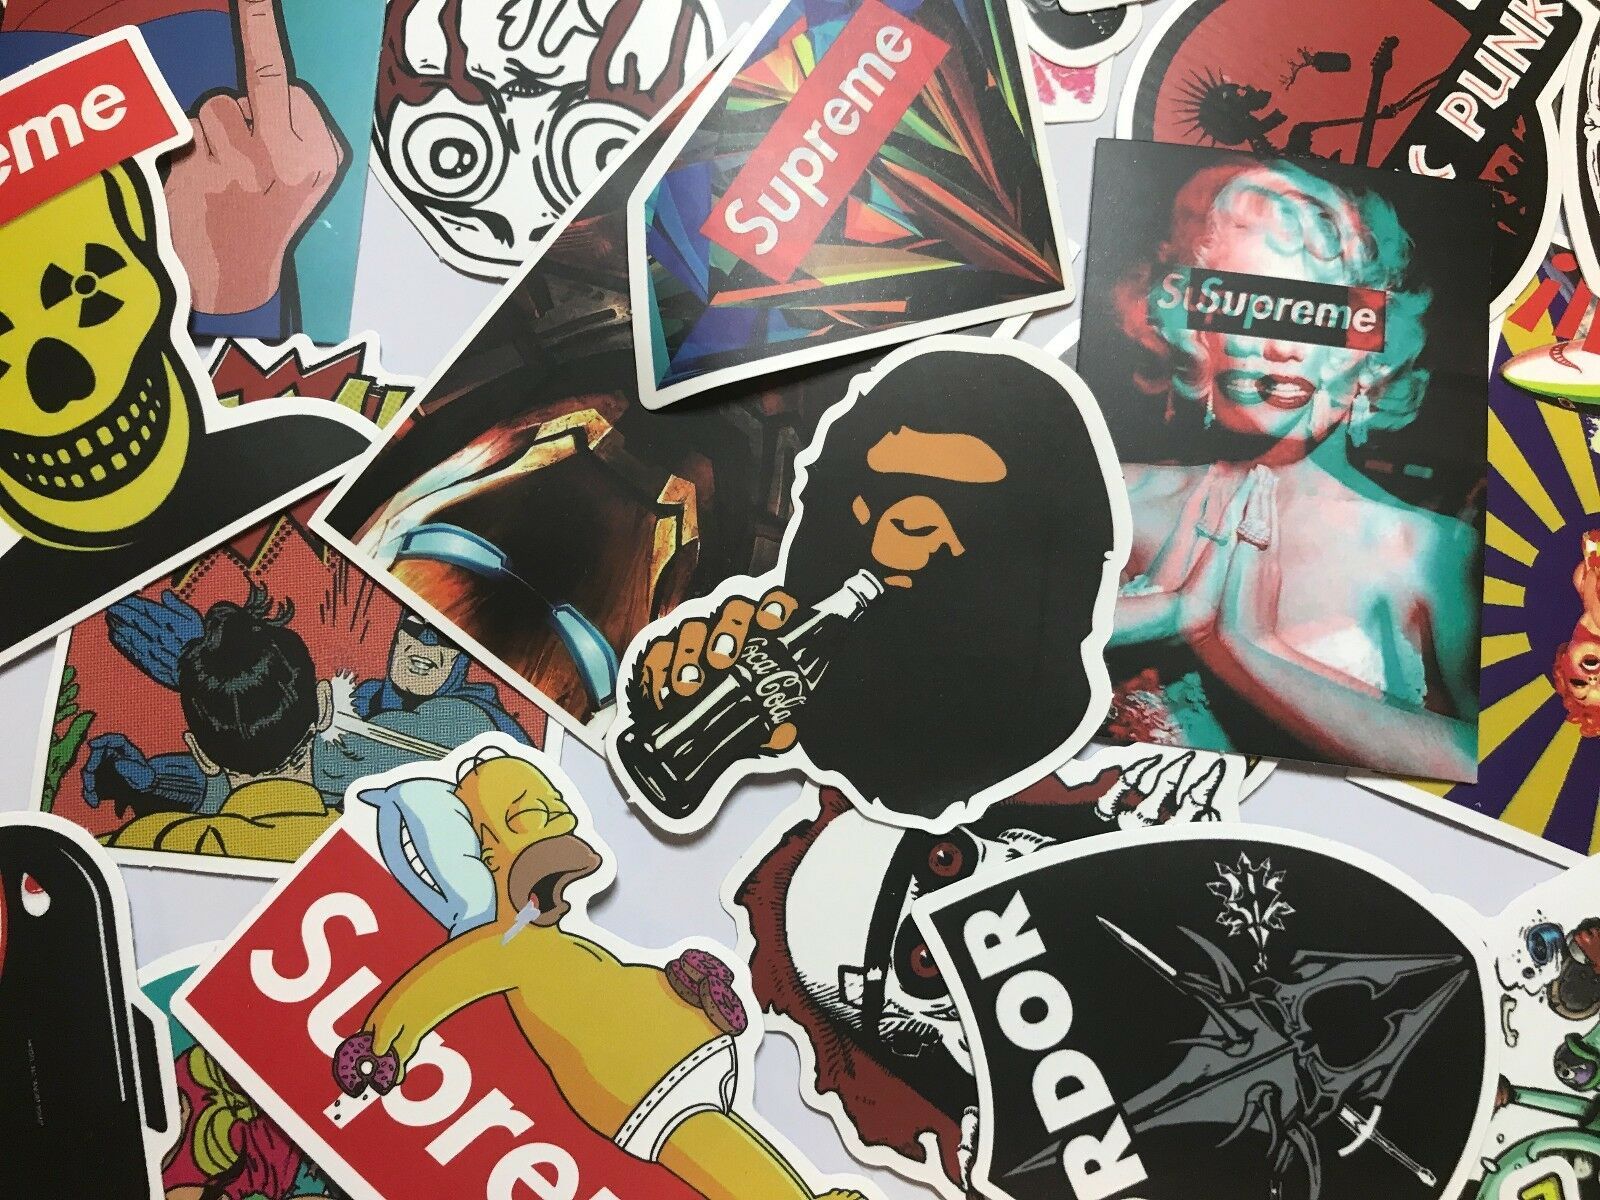 Cool Stickers Lot Sticker Bomb Pack 100 Pcs Skateboard Motorcycle Car Laptop Kid online